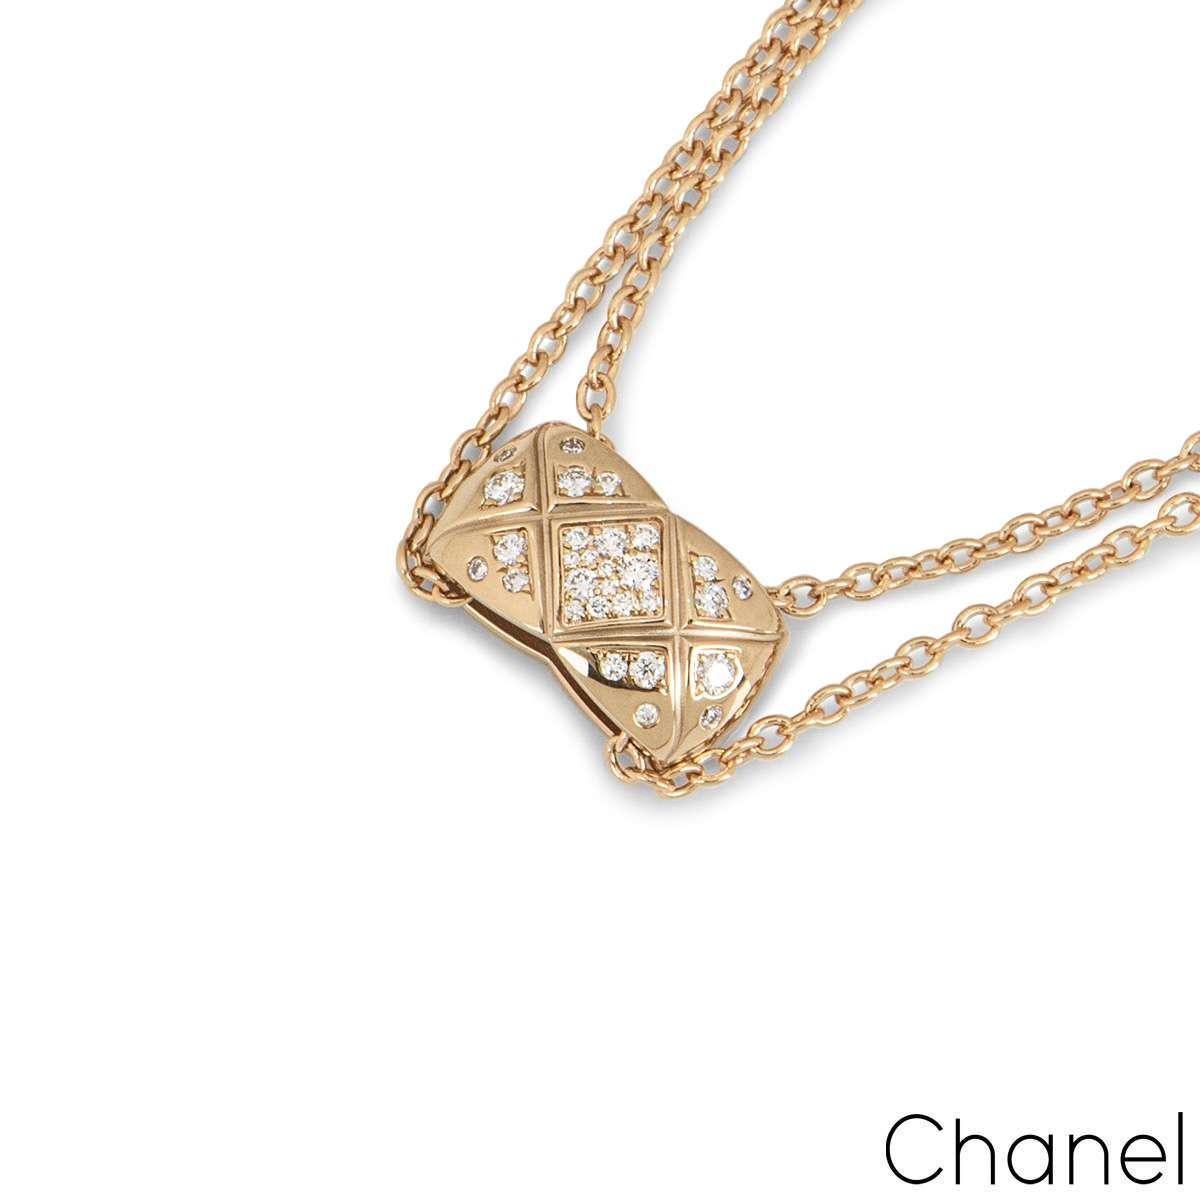 chanel coco crush necklace price